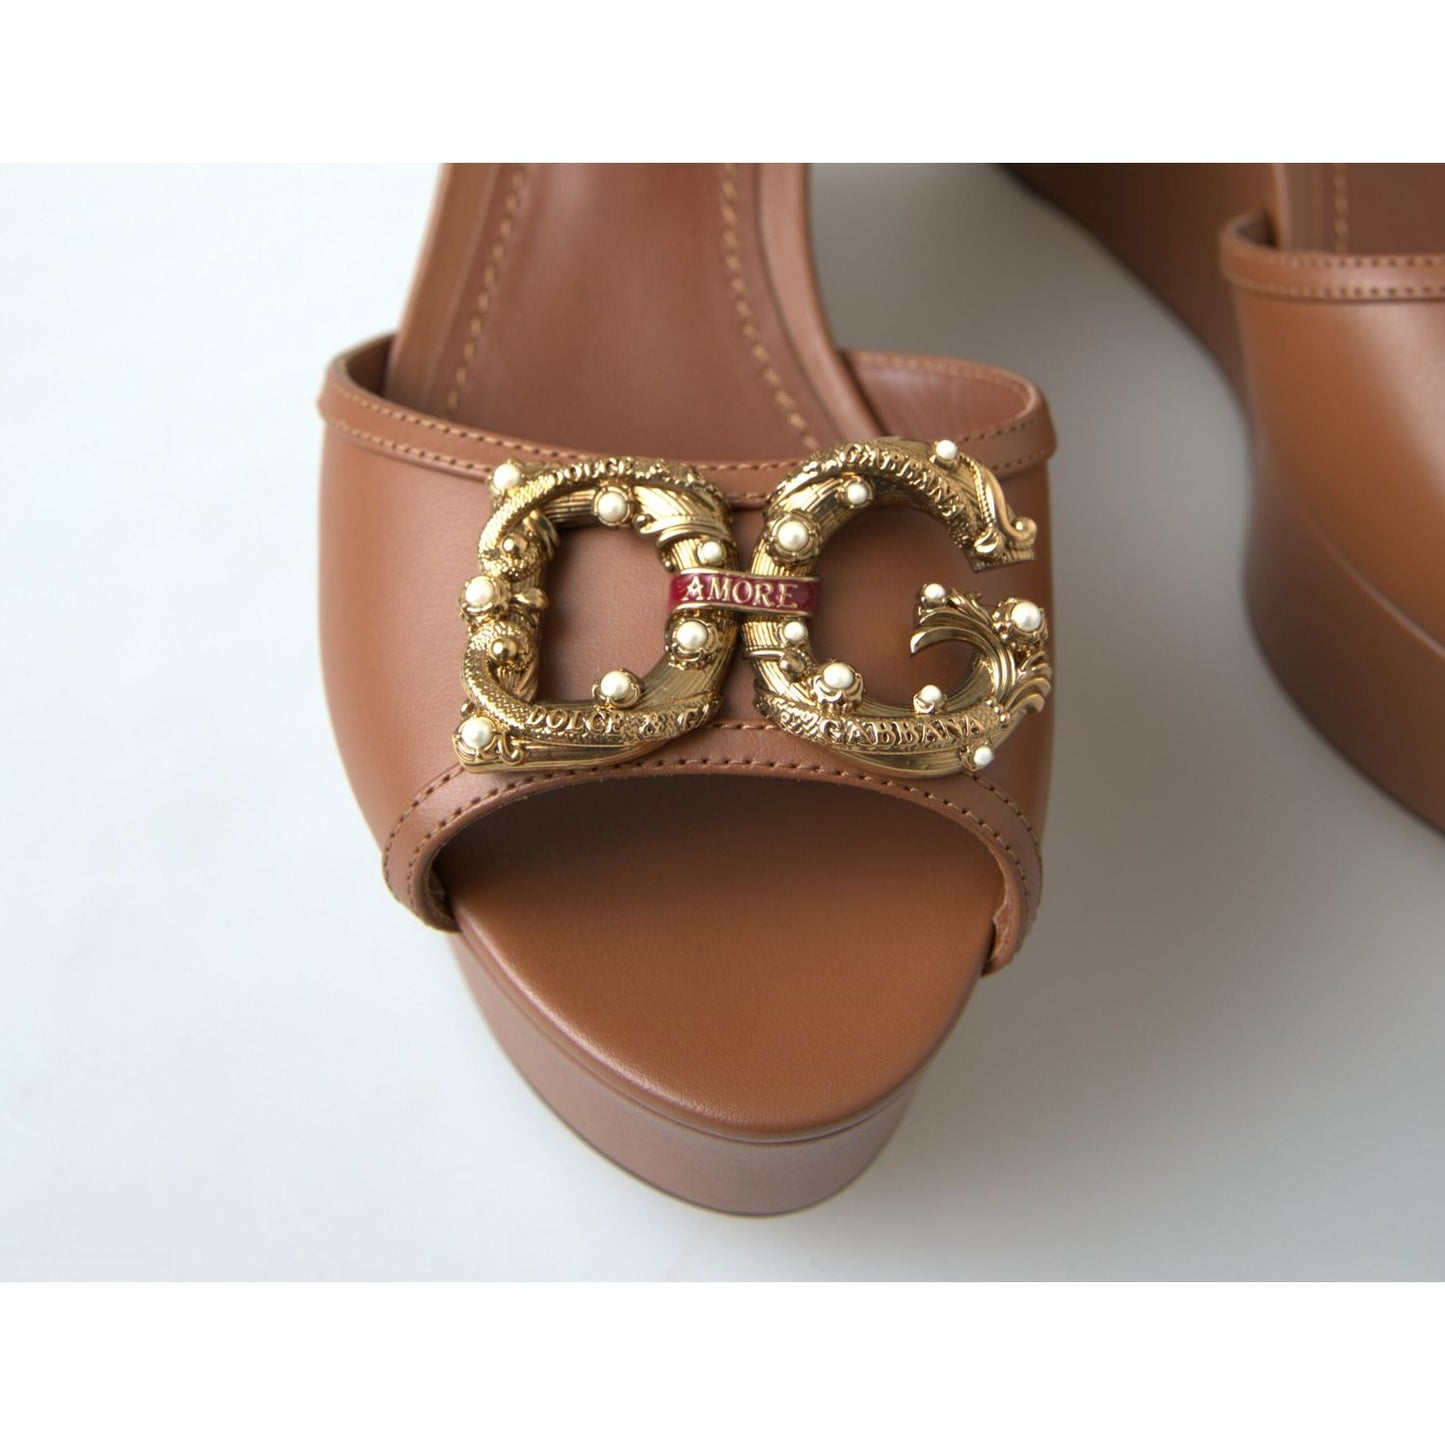 Dolce & Gabbana Chic Brown Leather Ankle Strap Wedges brown-leather-amore-wedges-sandals-shoes 465A0049-scaled-c3d04cbb-529.jpg